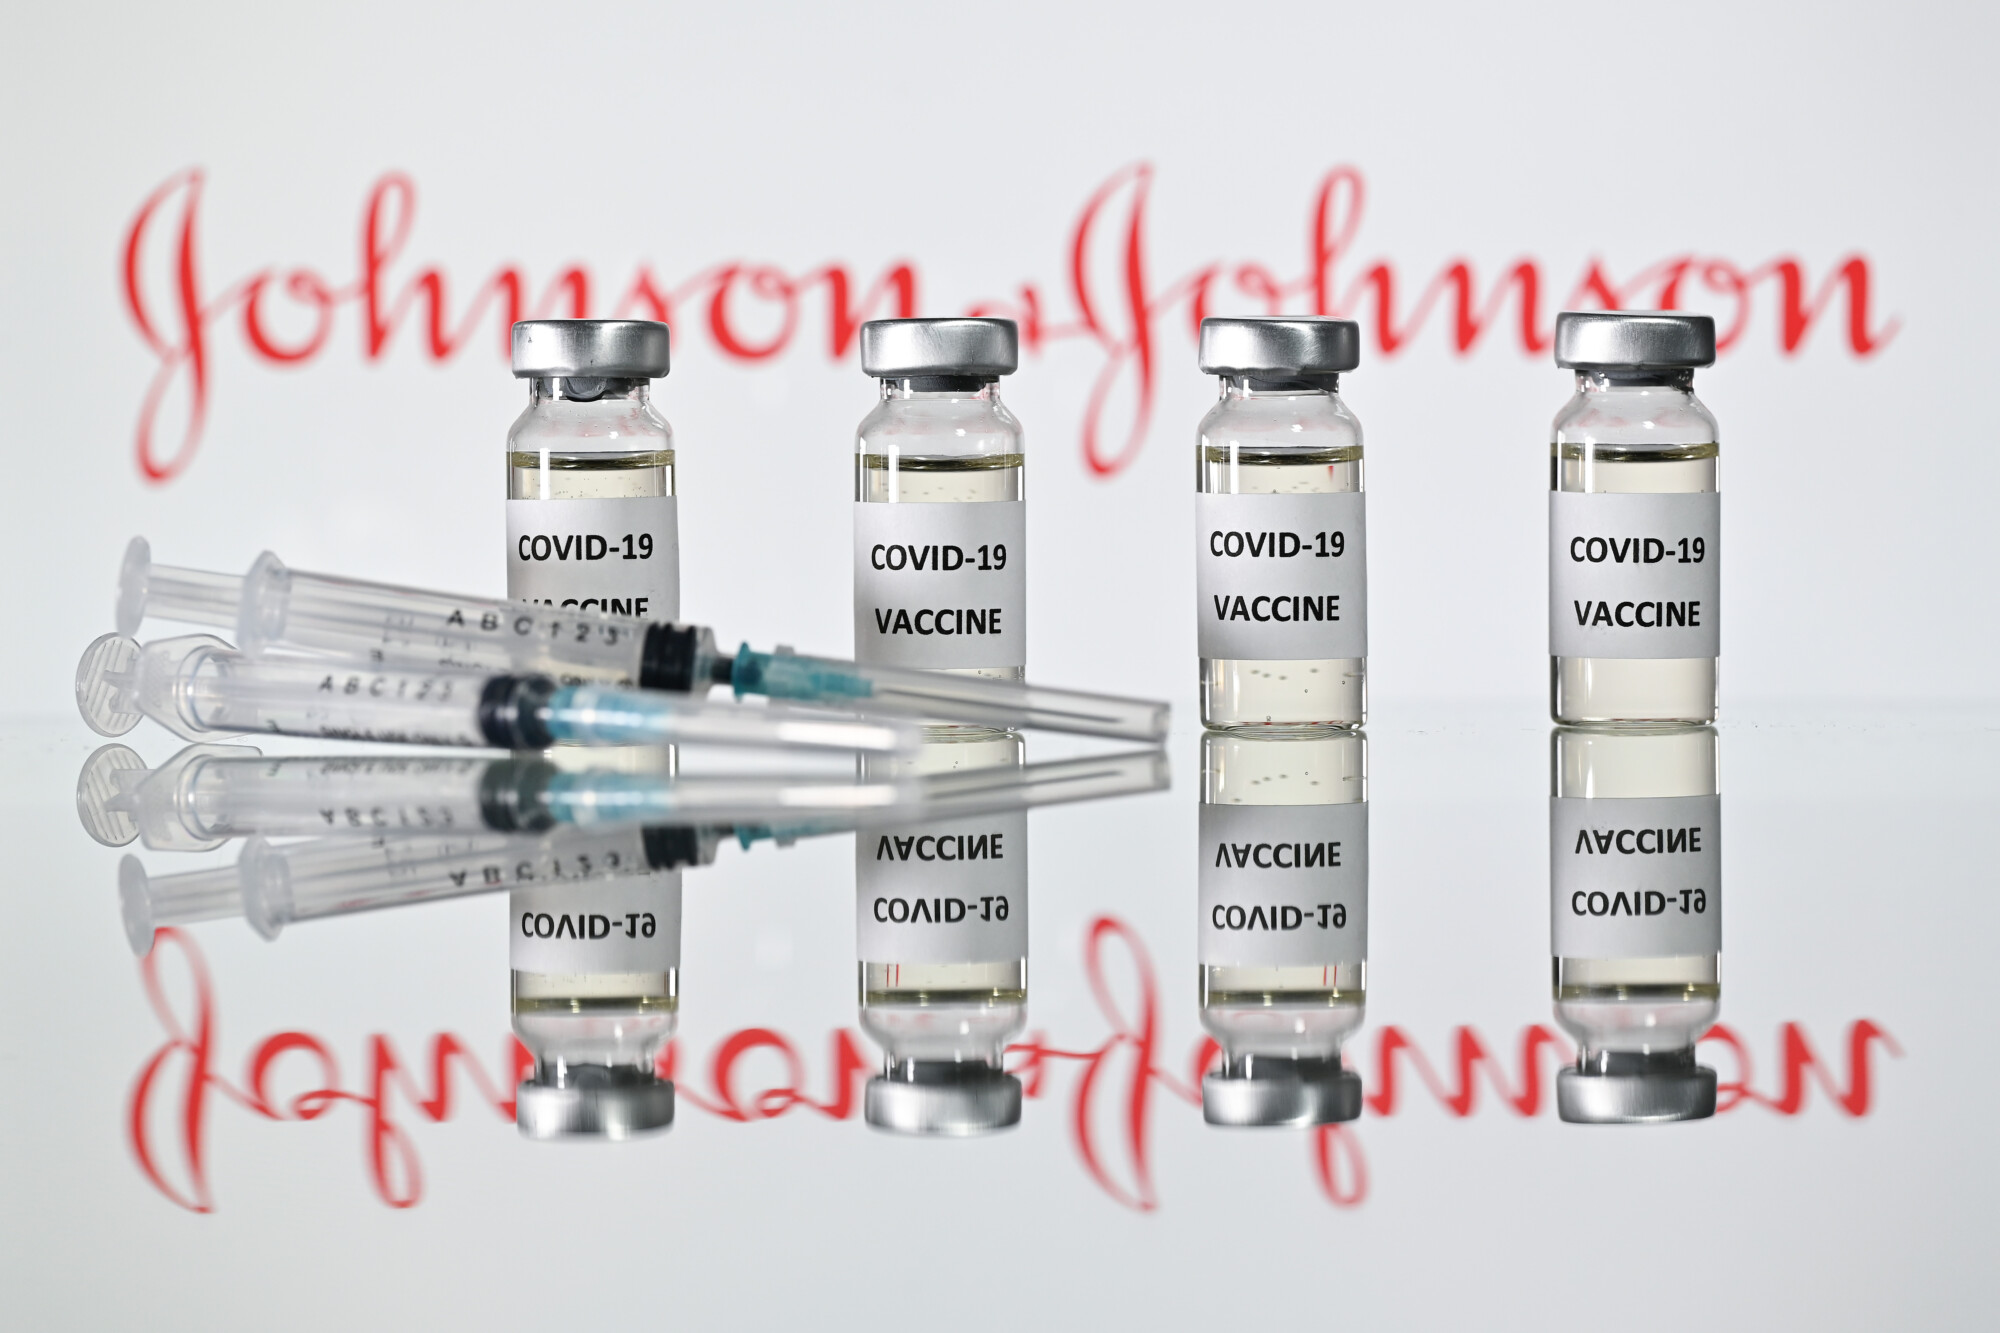 FDA Limits Use of Johnson and Johnson’s COVID-19 Vaccine